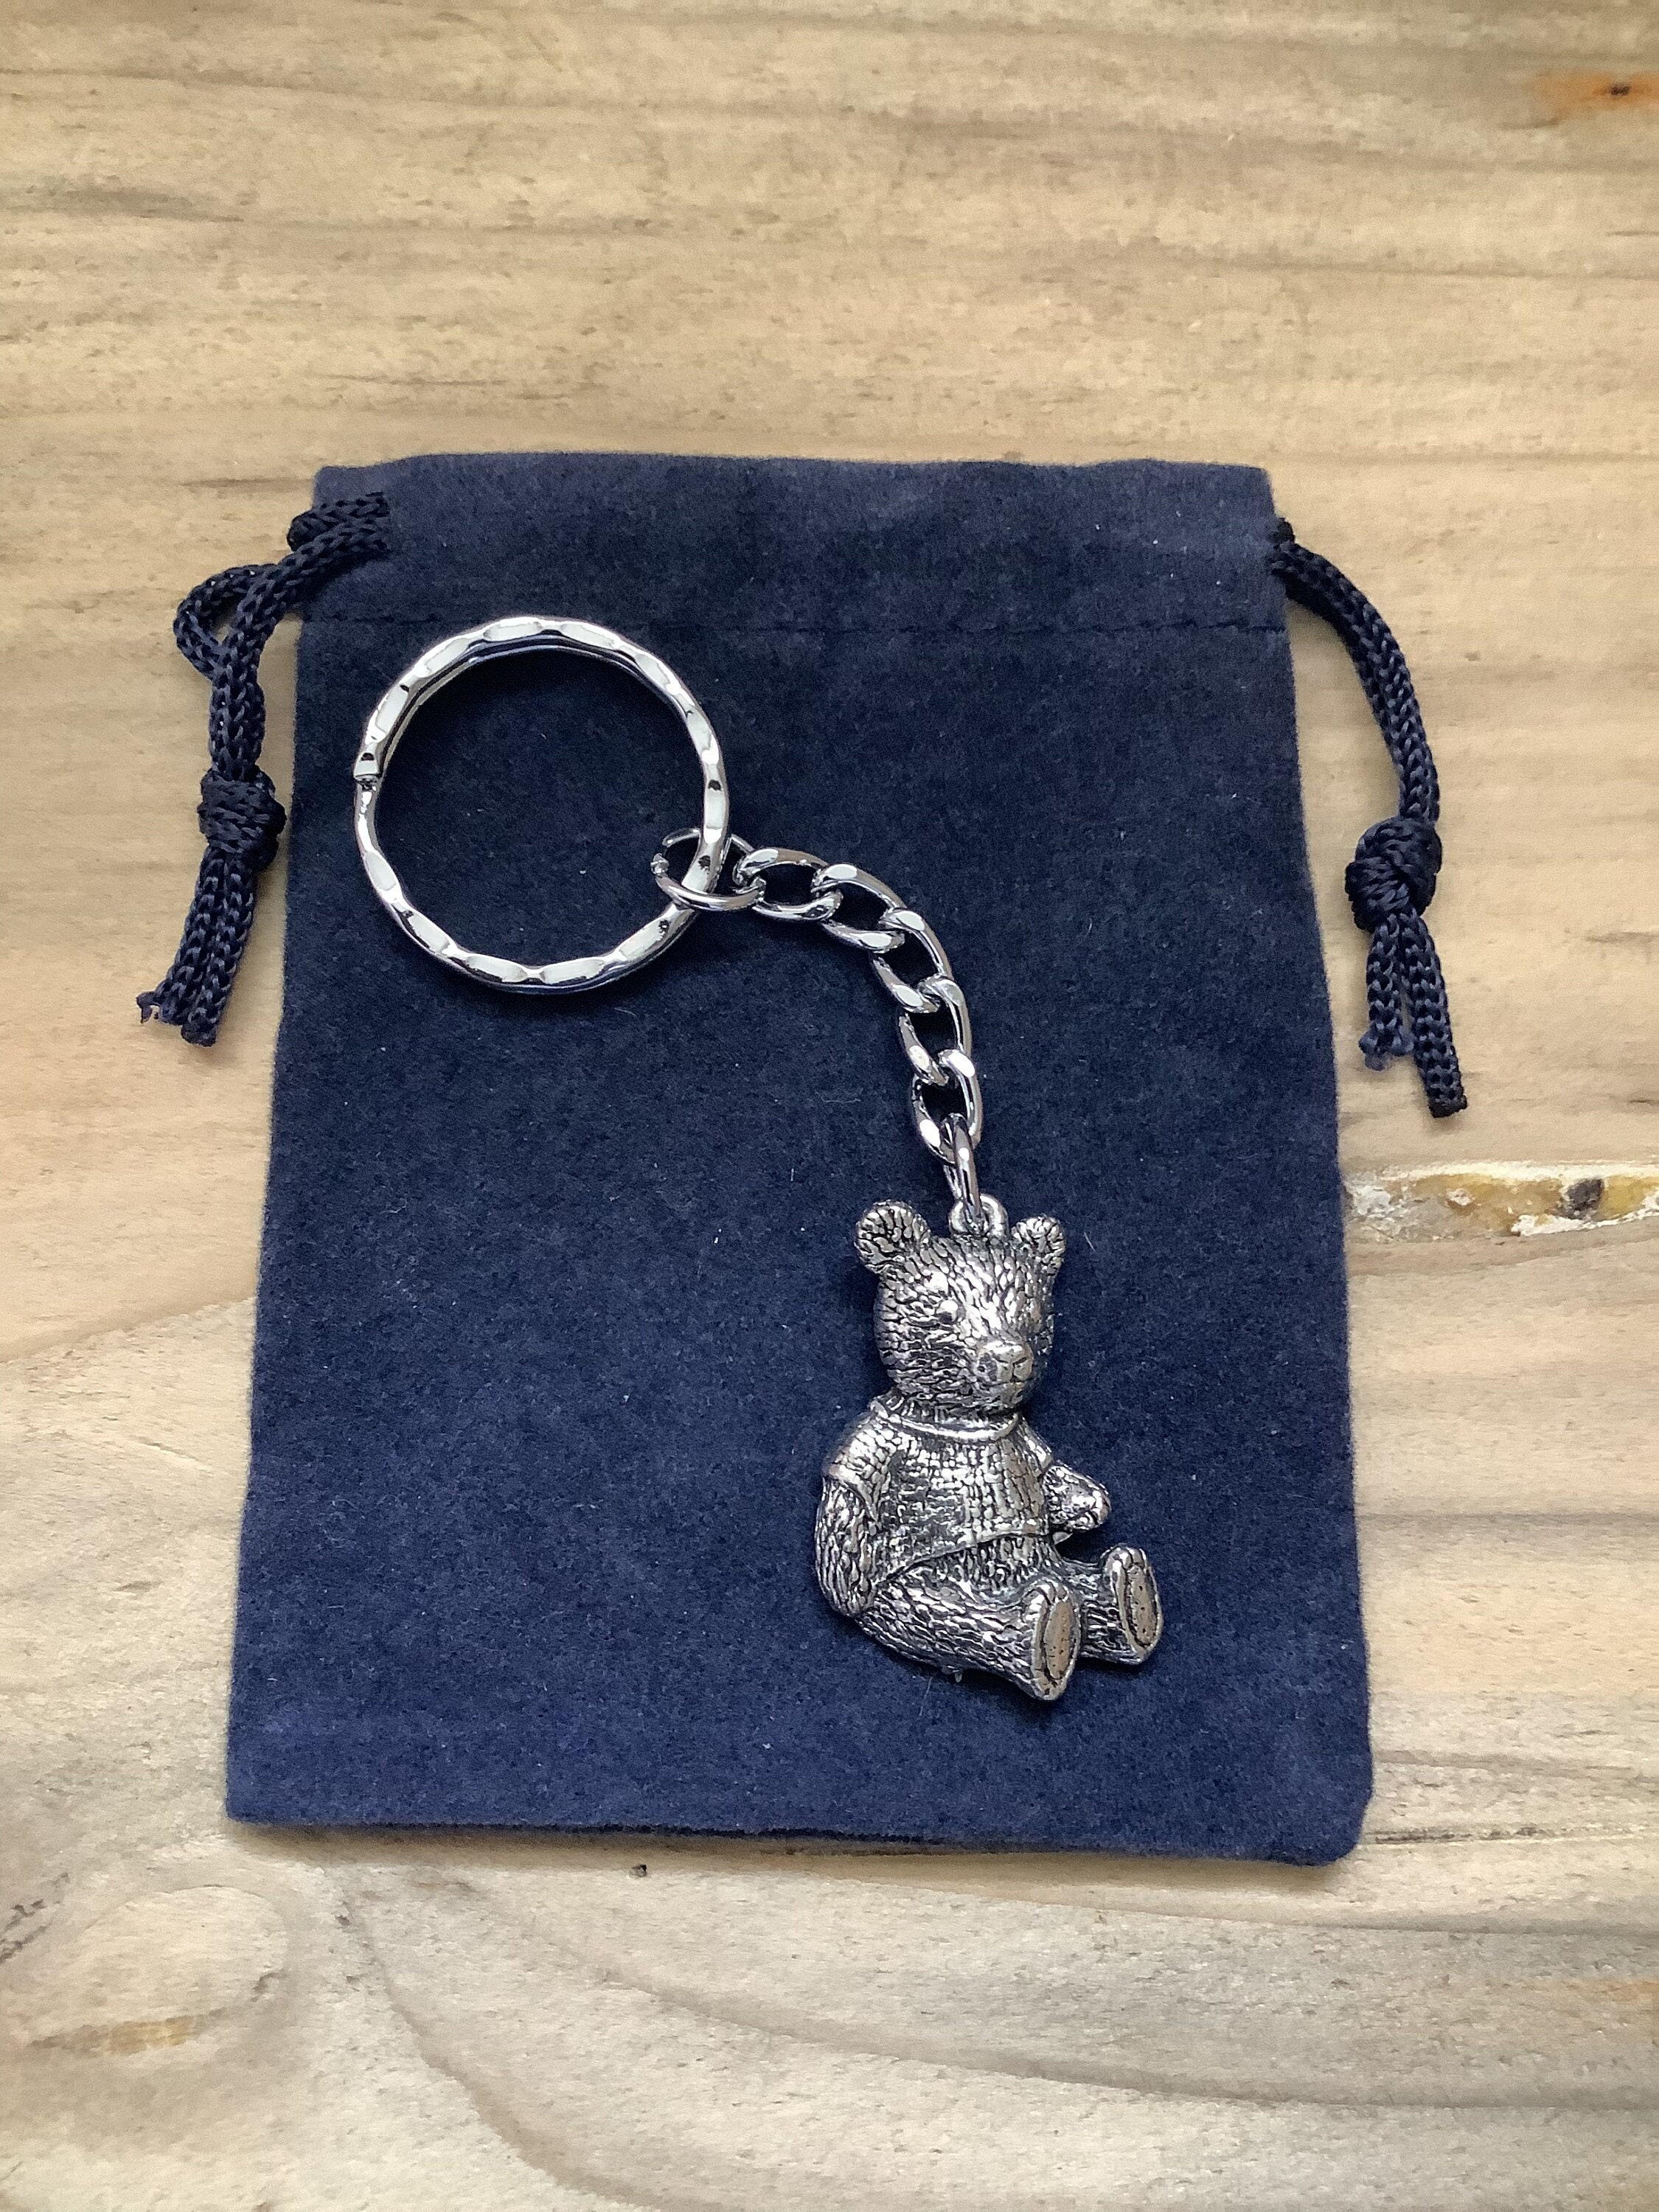 LOUIS VUITTON XMAS Teddy Bear Monogram Bag Charm Key Chain Holder